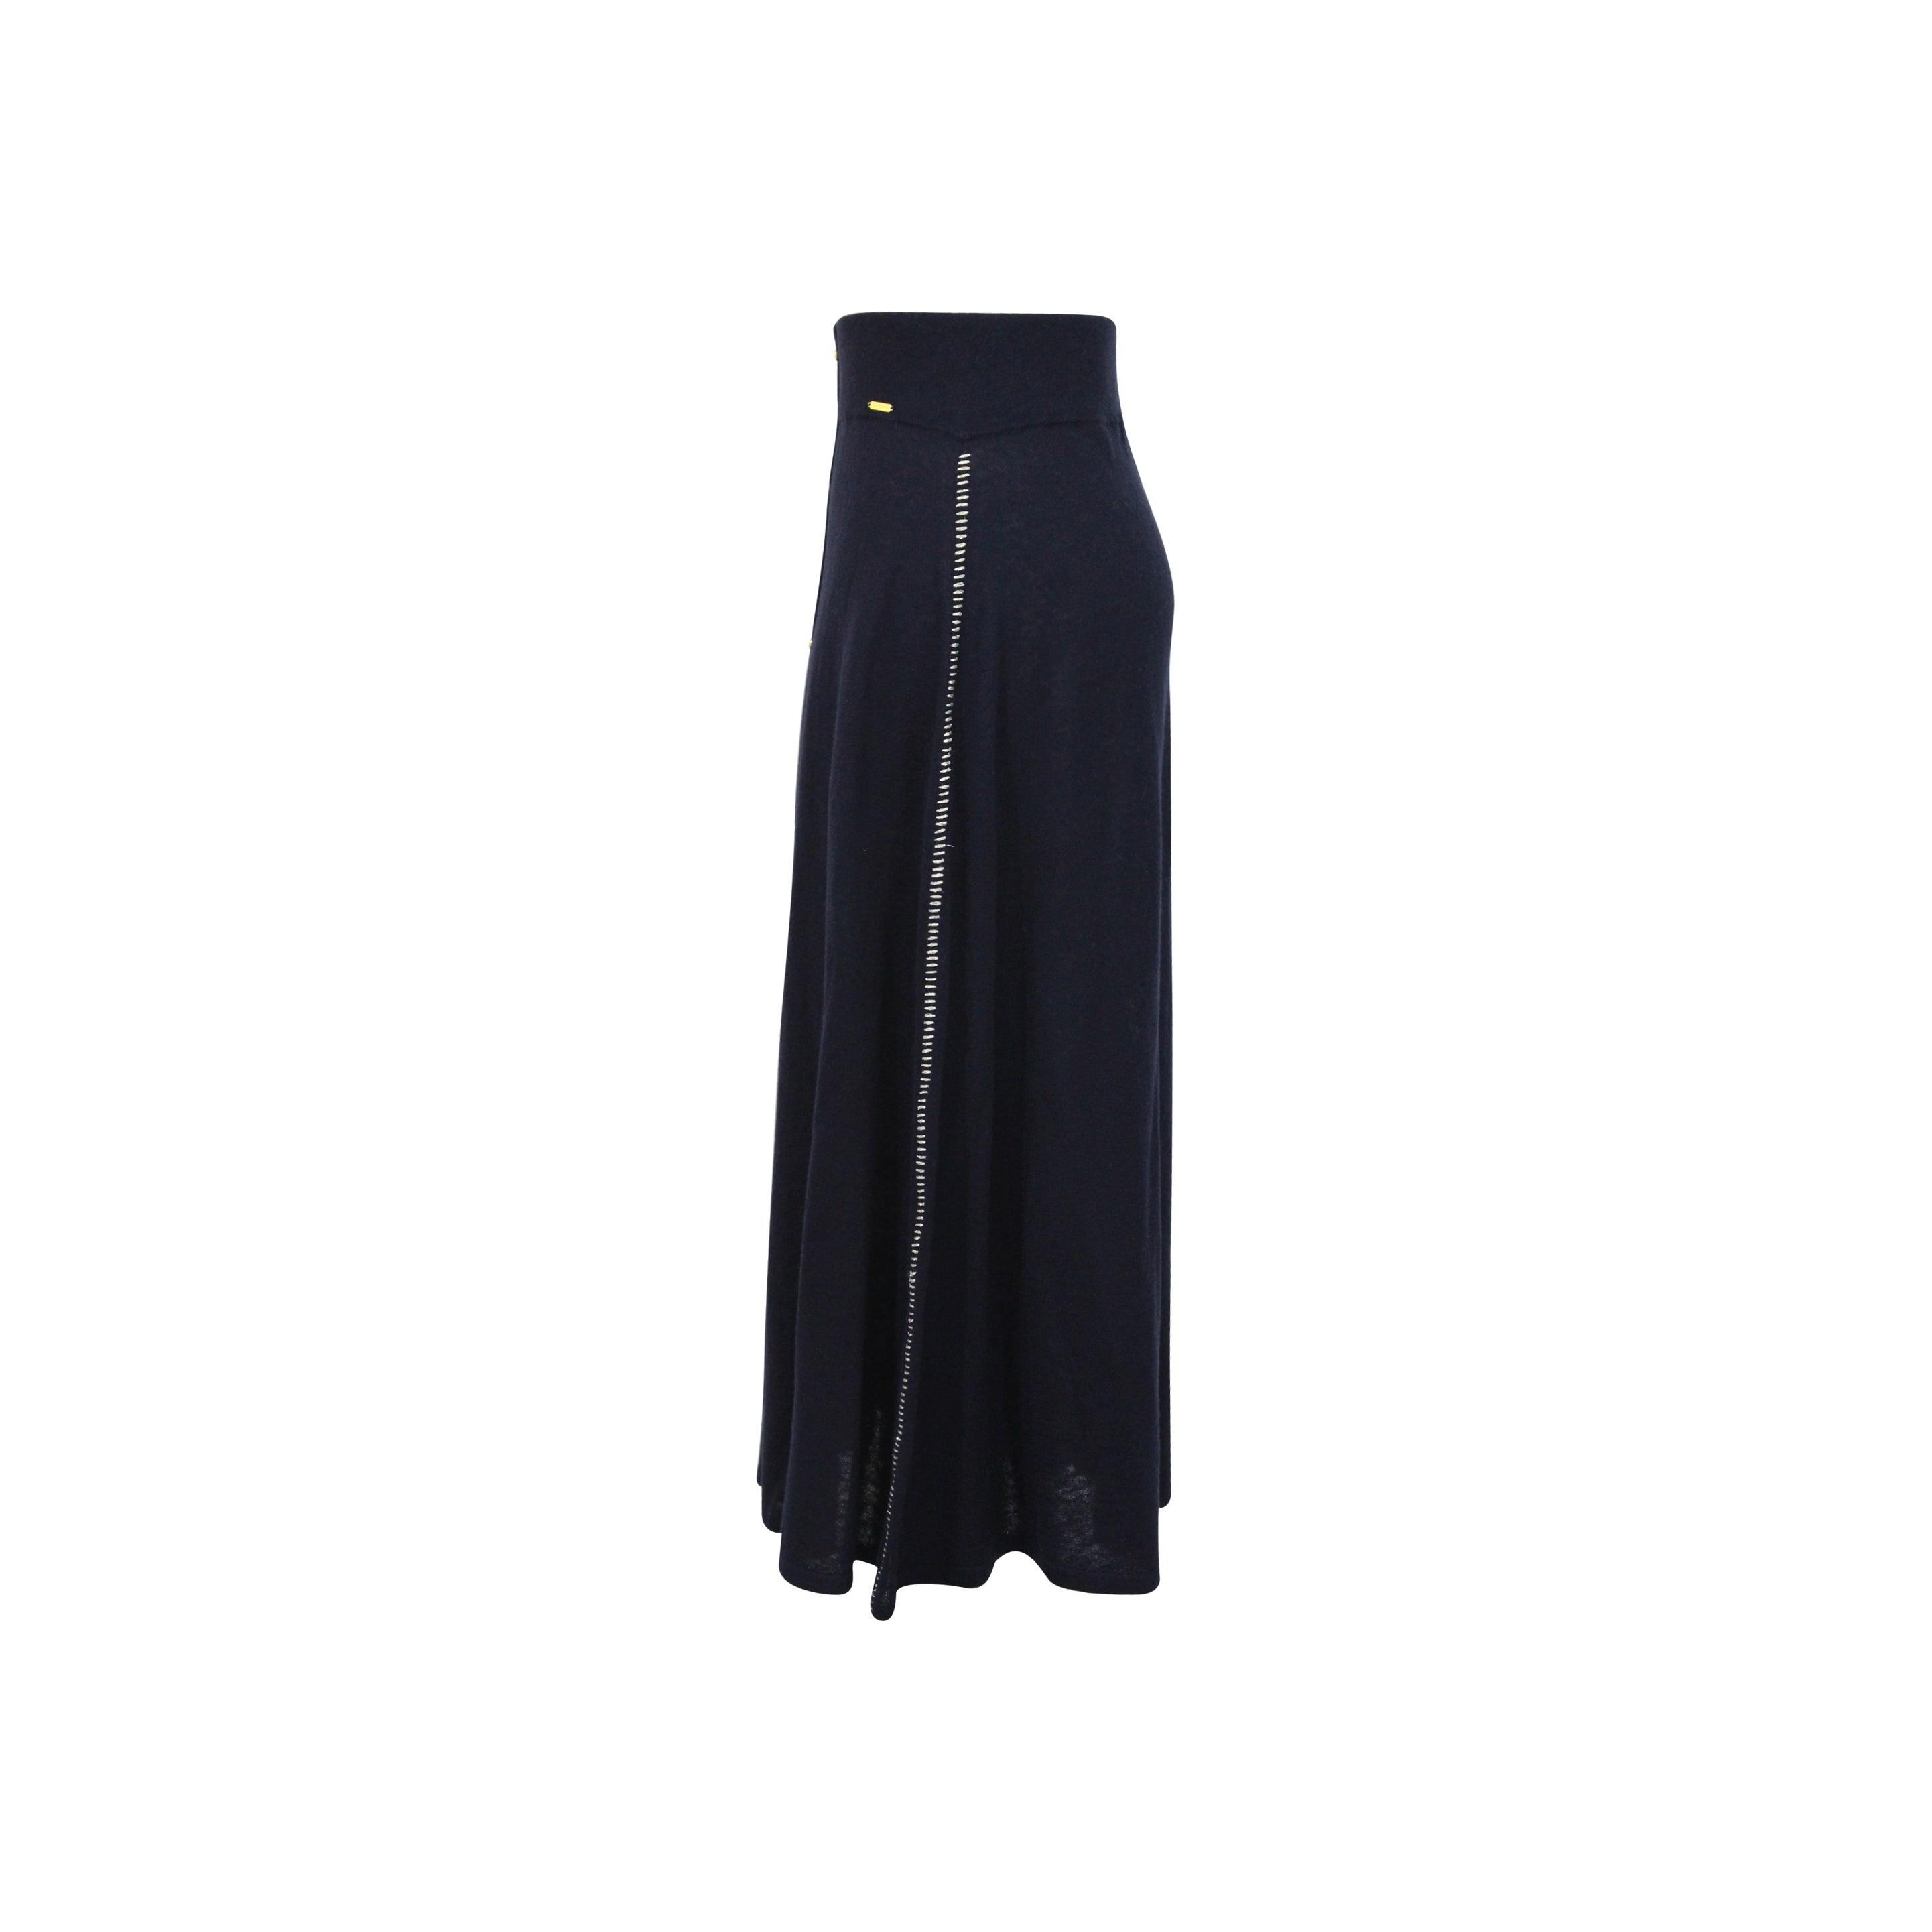 " VIOLET " Knit Button Skirt - Navy Blue